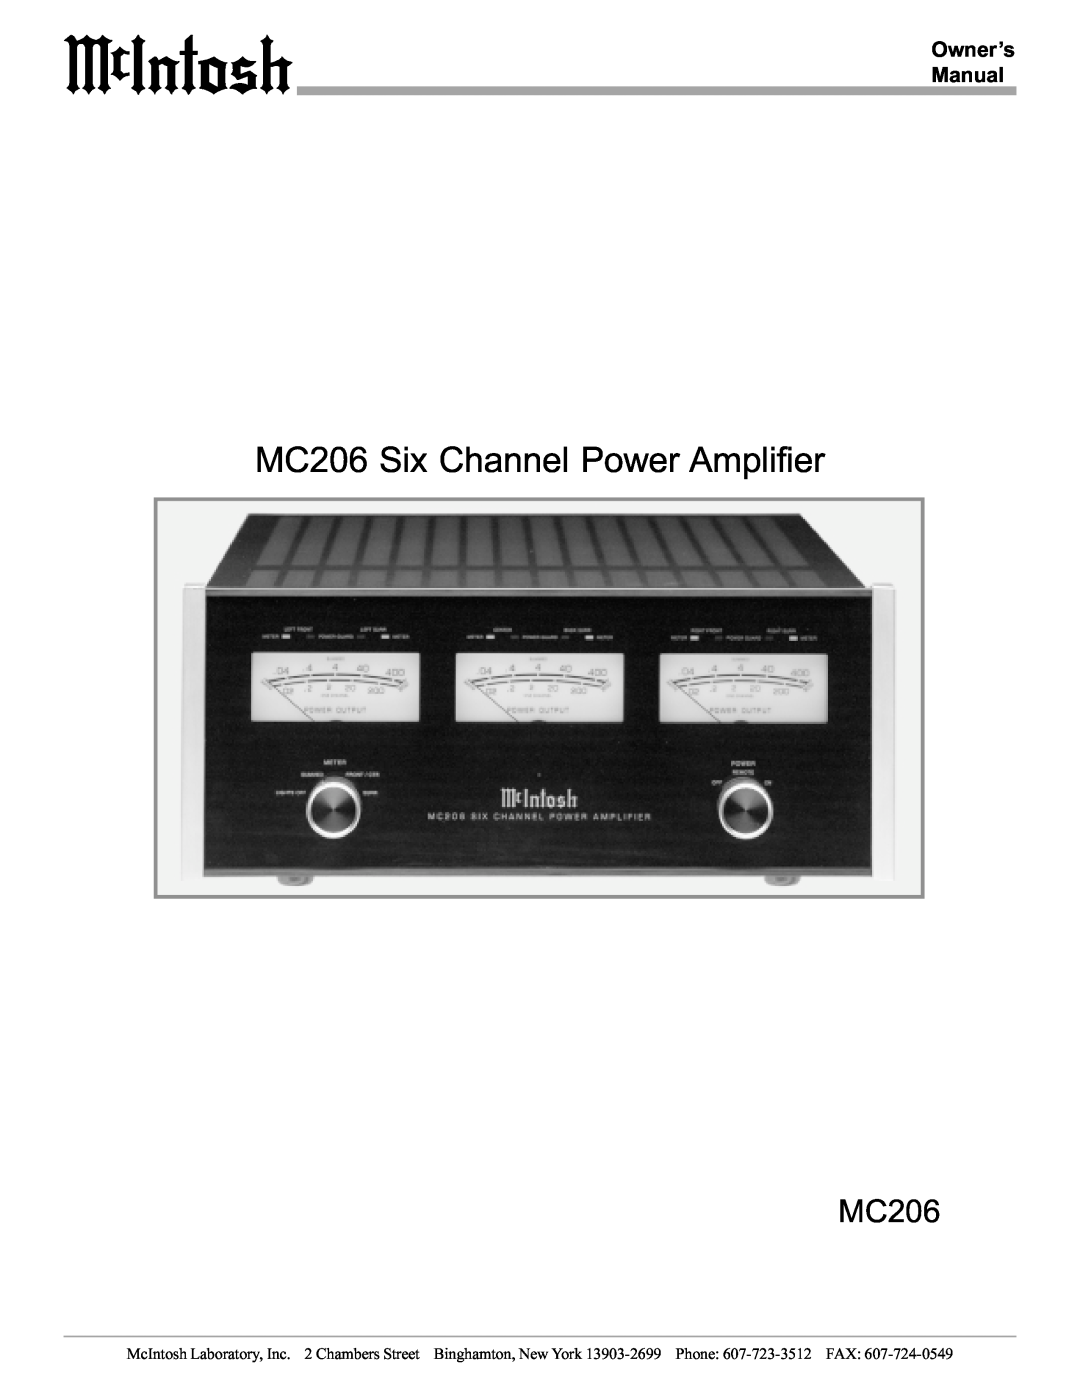 McIntosh manual MC206 Six Channel Power Amplifier 